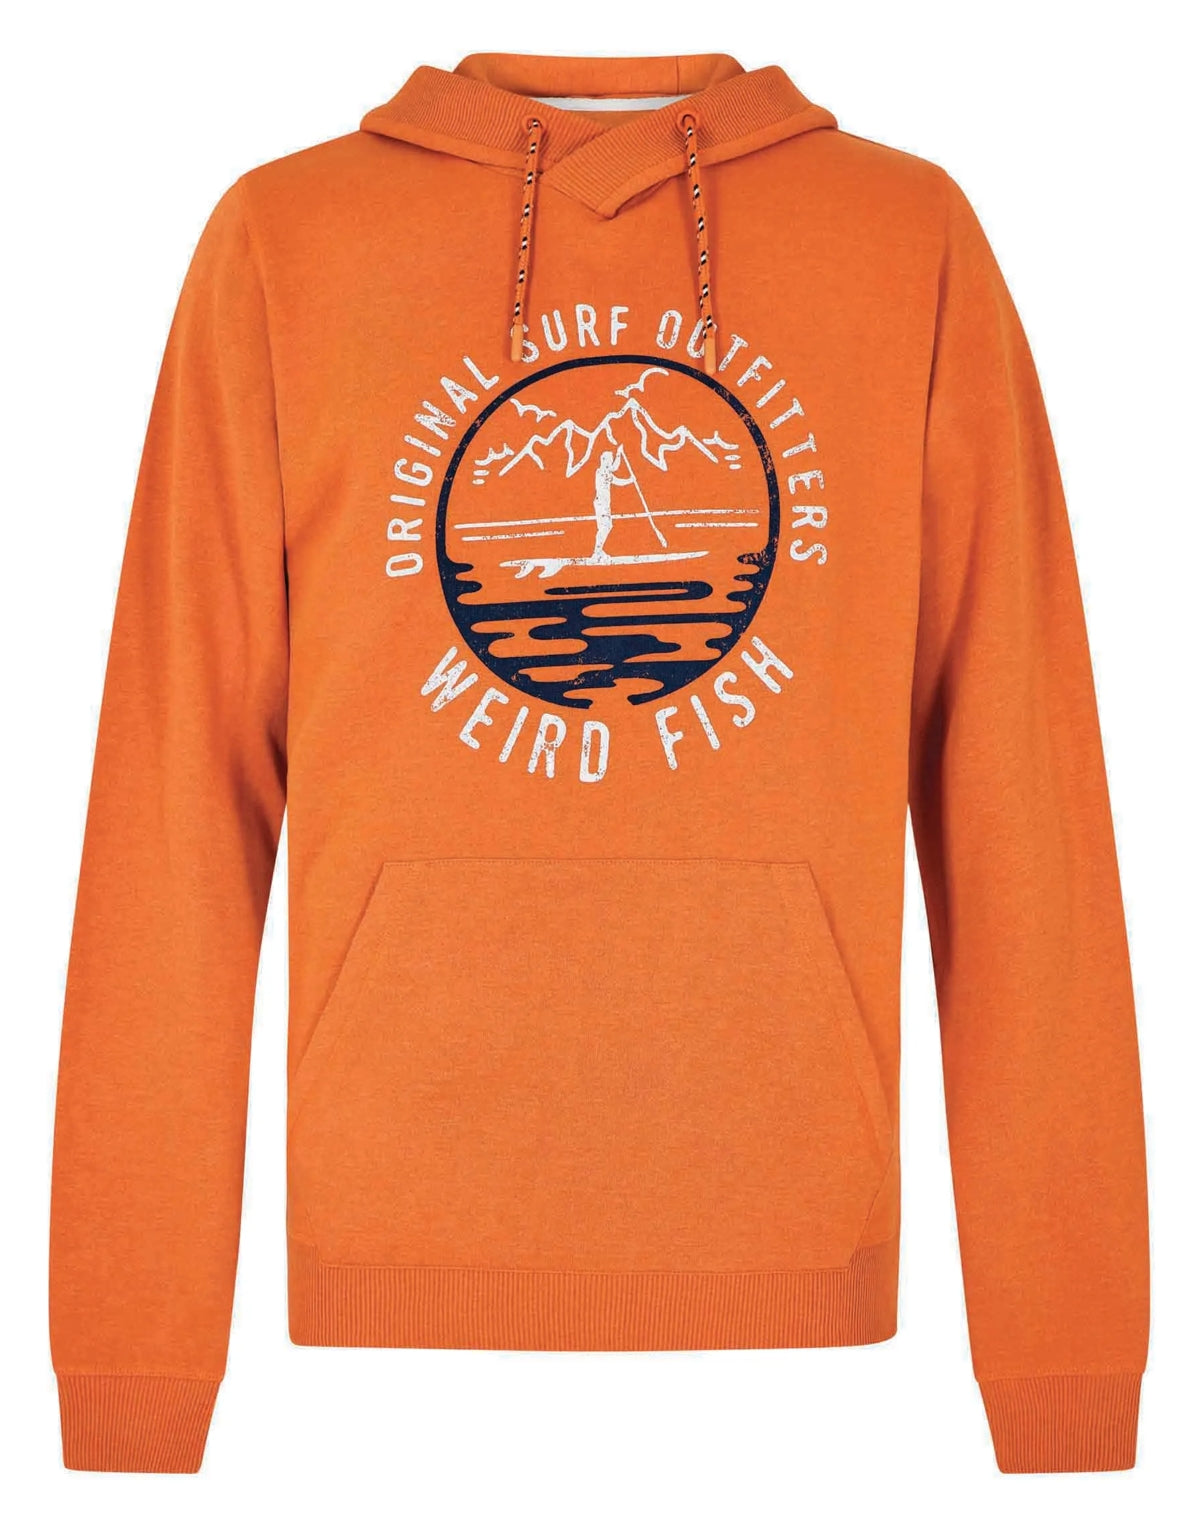 Weird Fish men's Burnt Orange pop over Brick Orange hoody with paddleboarder logo print.